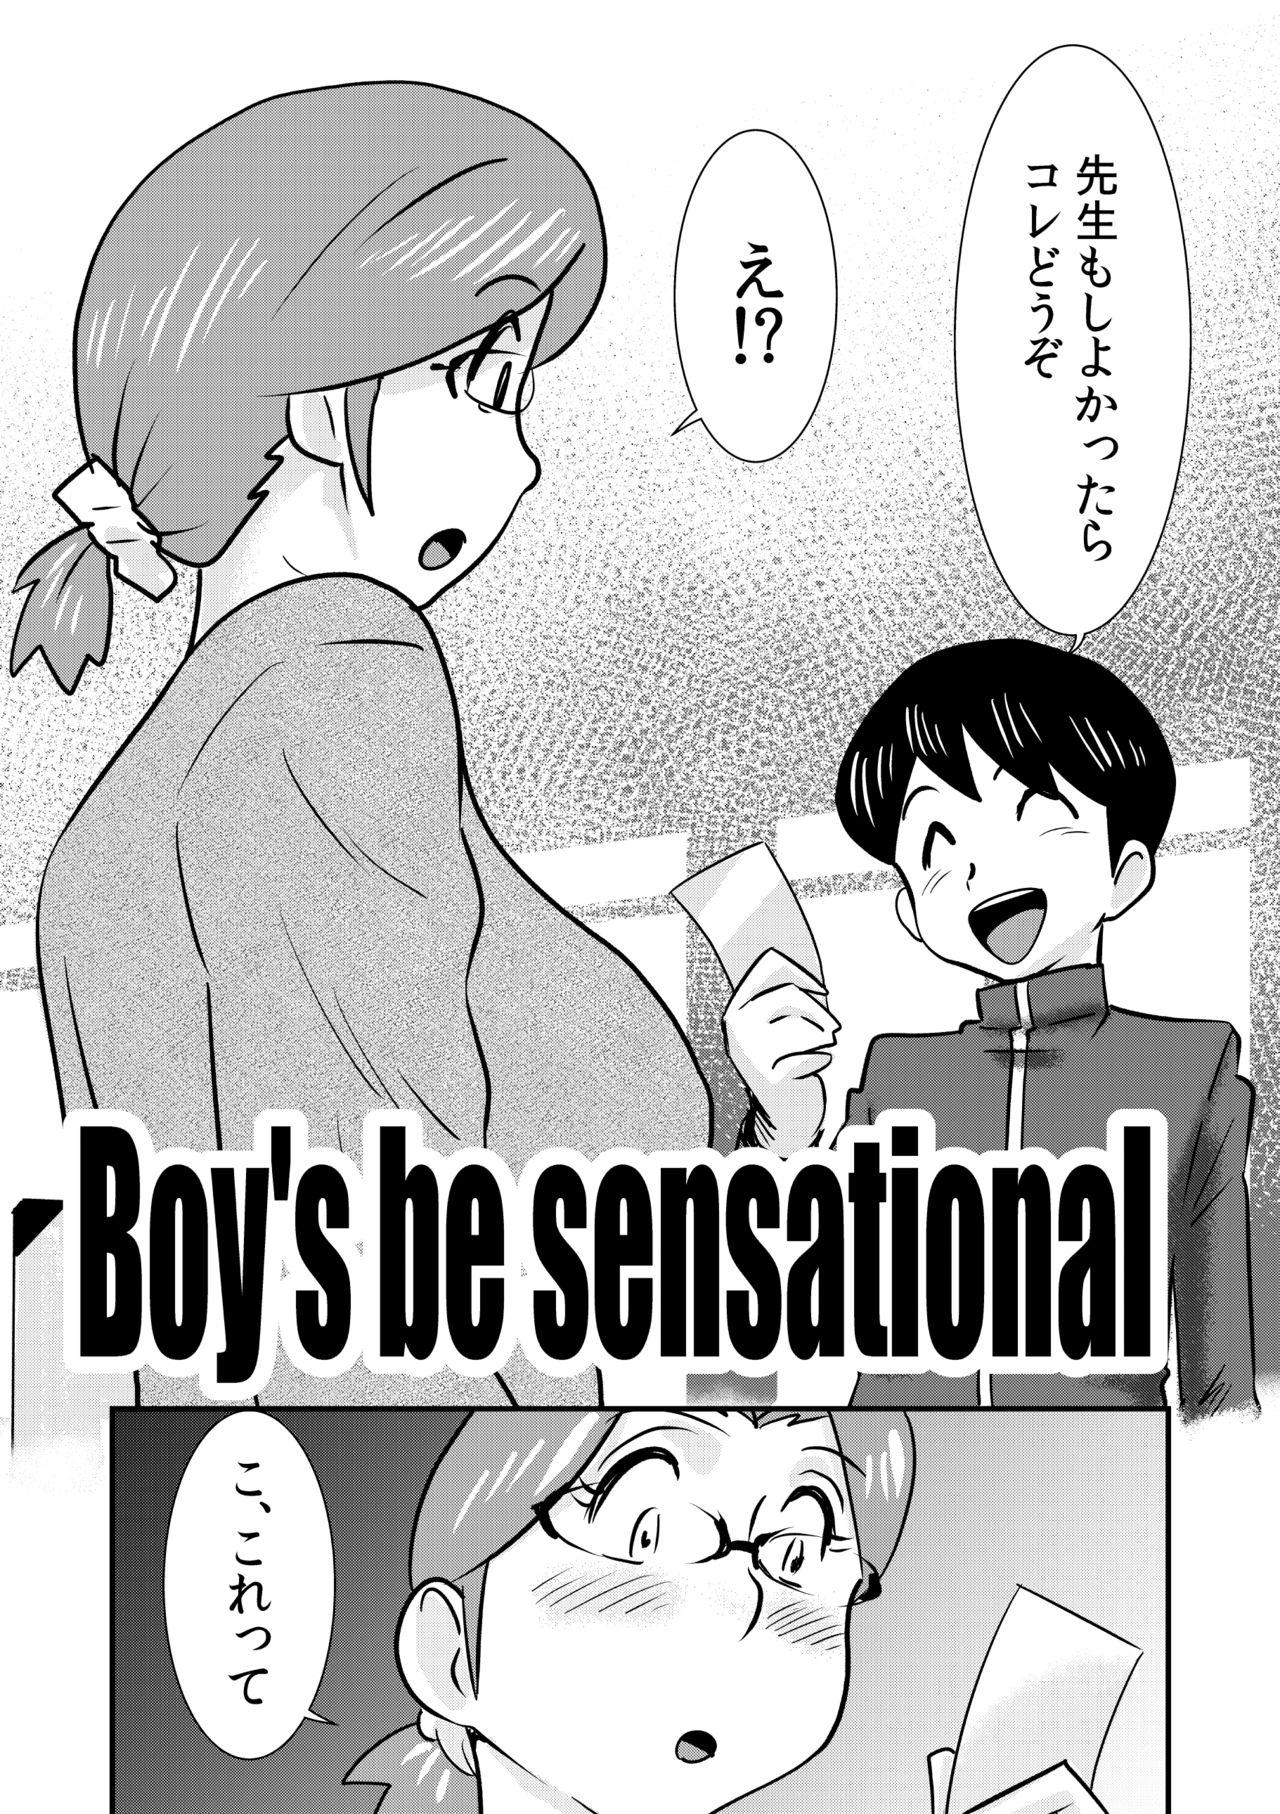 Boy's be sensational 1